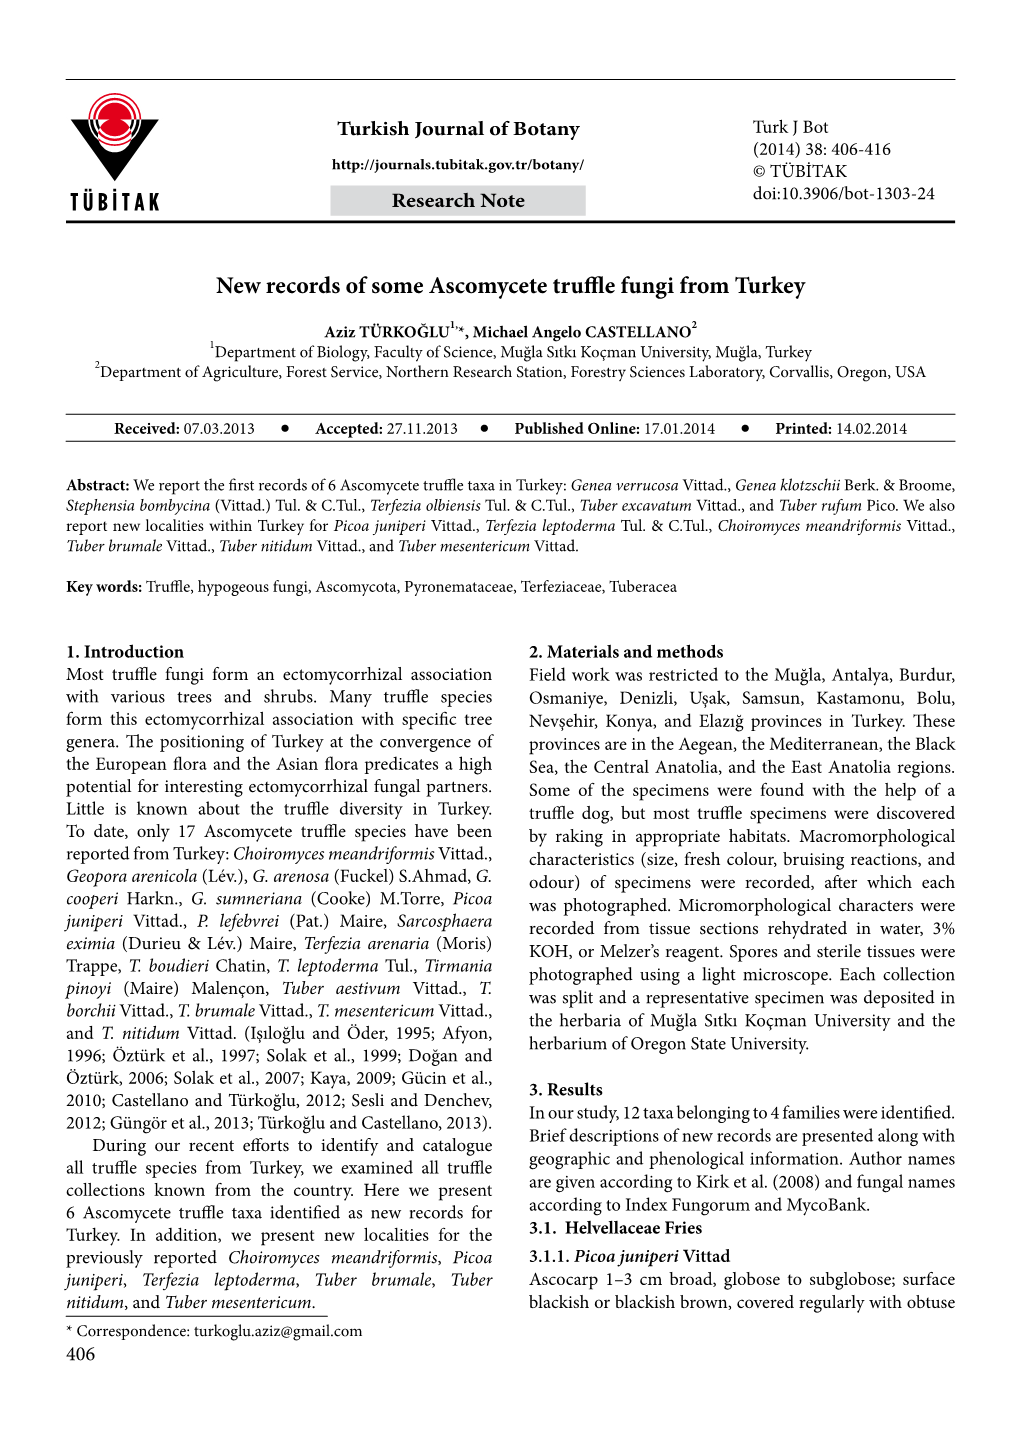 New Records of Some Ascomycete Truffle Fungi from Turkey